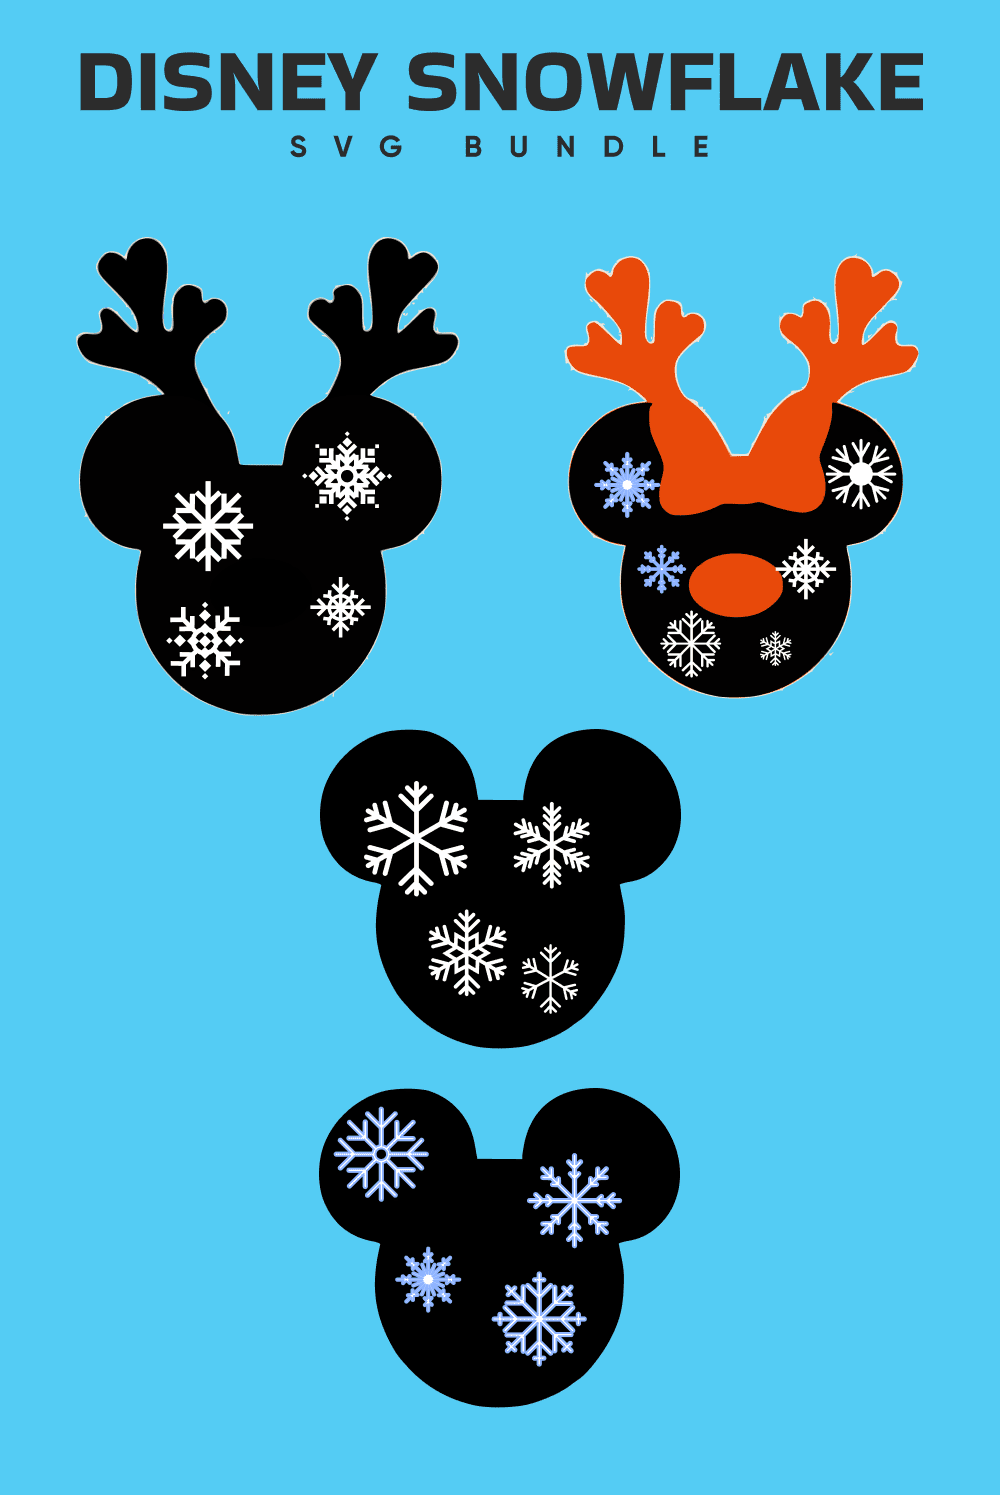 Disney Snowflake SVG - pinterest image preview.